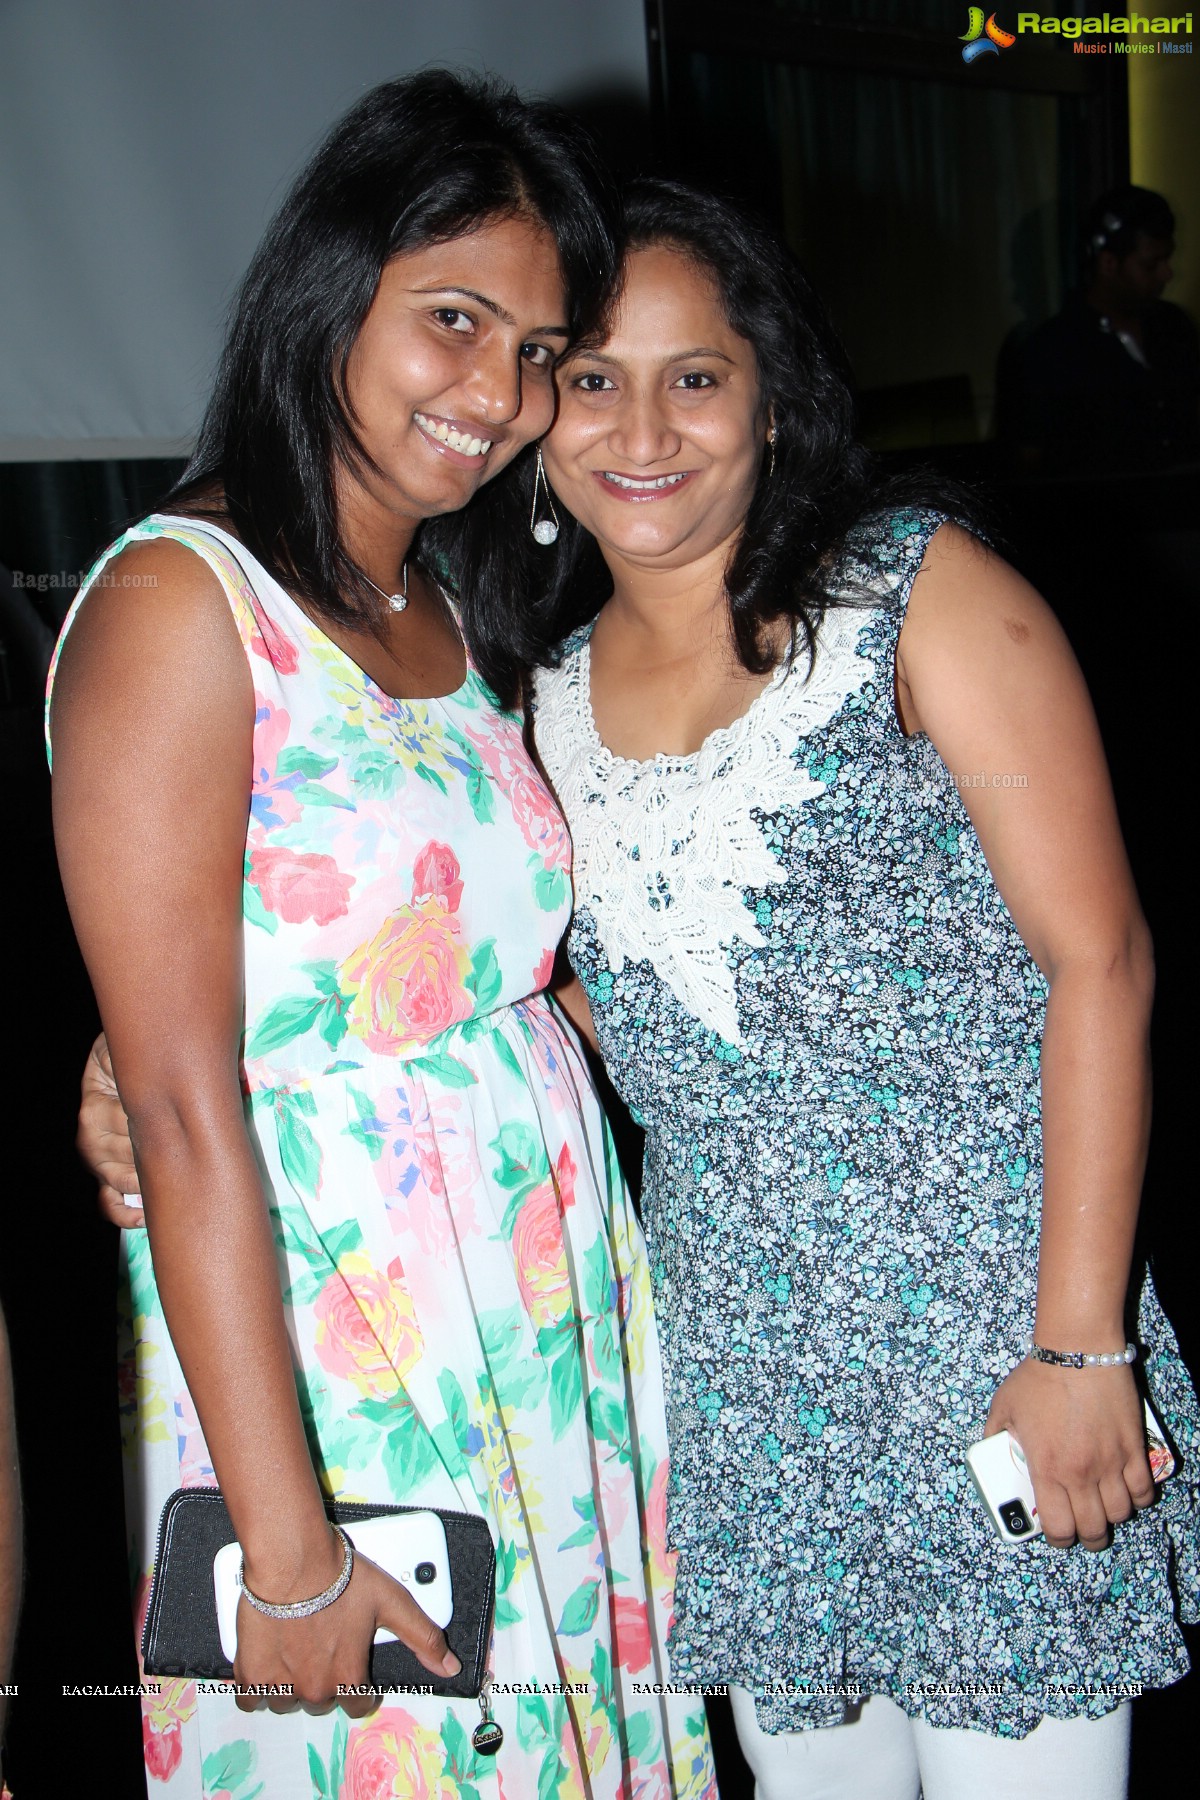 Alekhya Reddy Birthday Party 2014 at Daspalla, Hyderabad